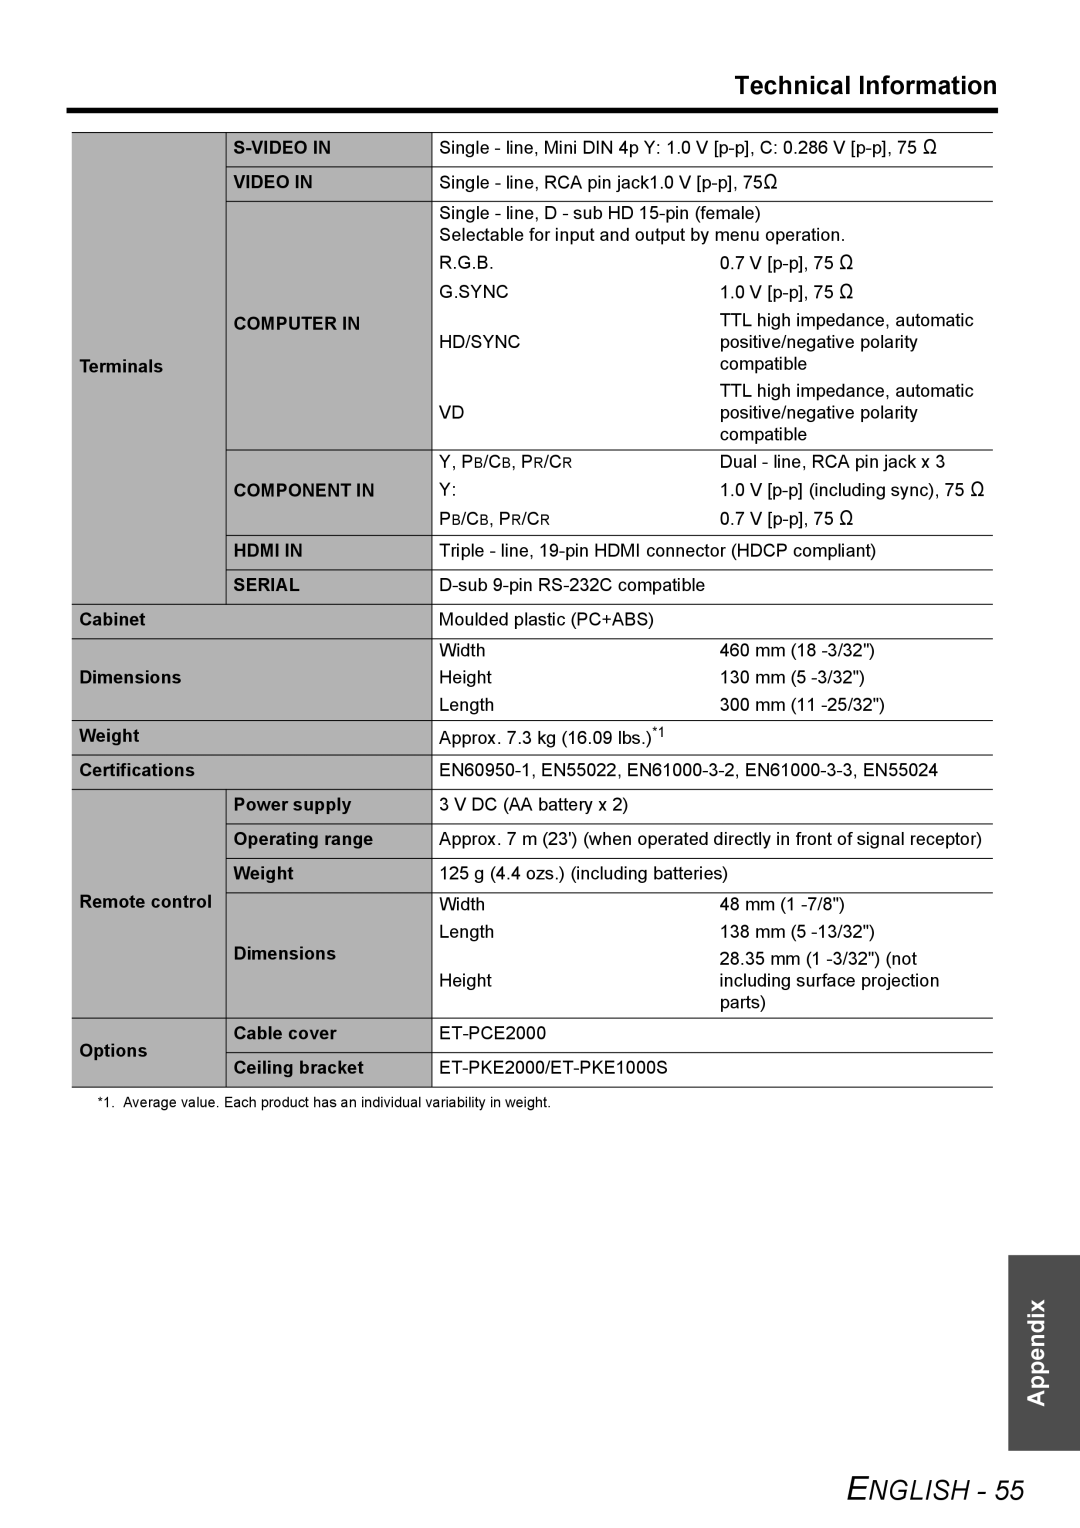 Panasonic PT-AE3000E manual English, Technical Information, Appendix 